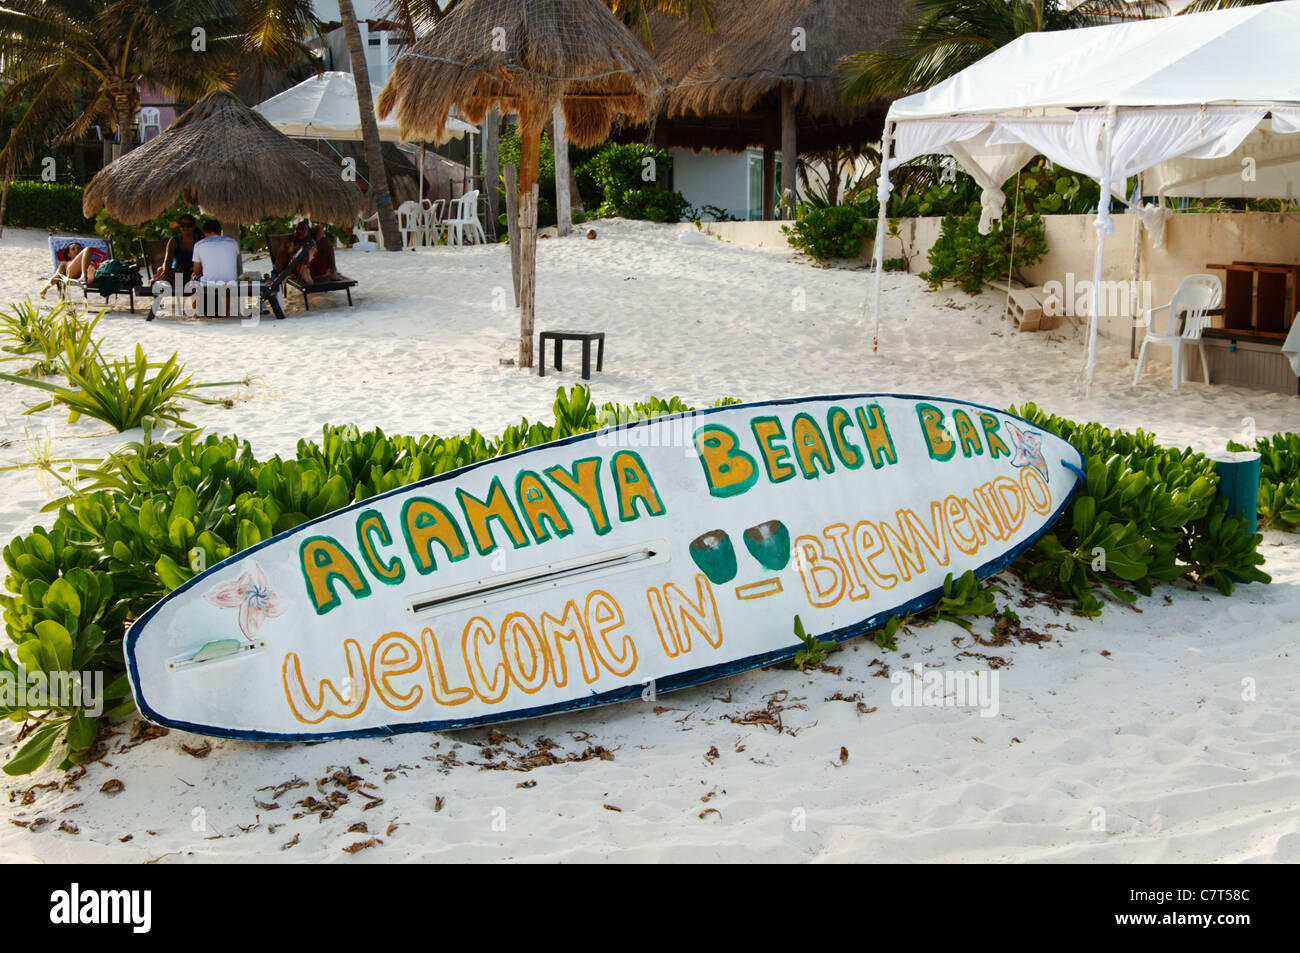 Acamaya beach bar, Puerto Morelos, Riviera Maya, Caribbean coast of Mexico Stock Photo